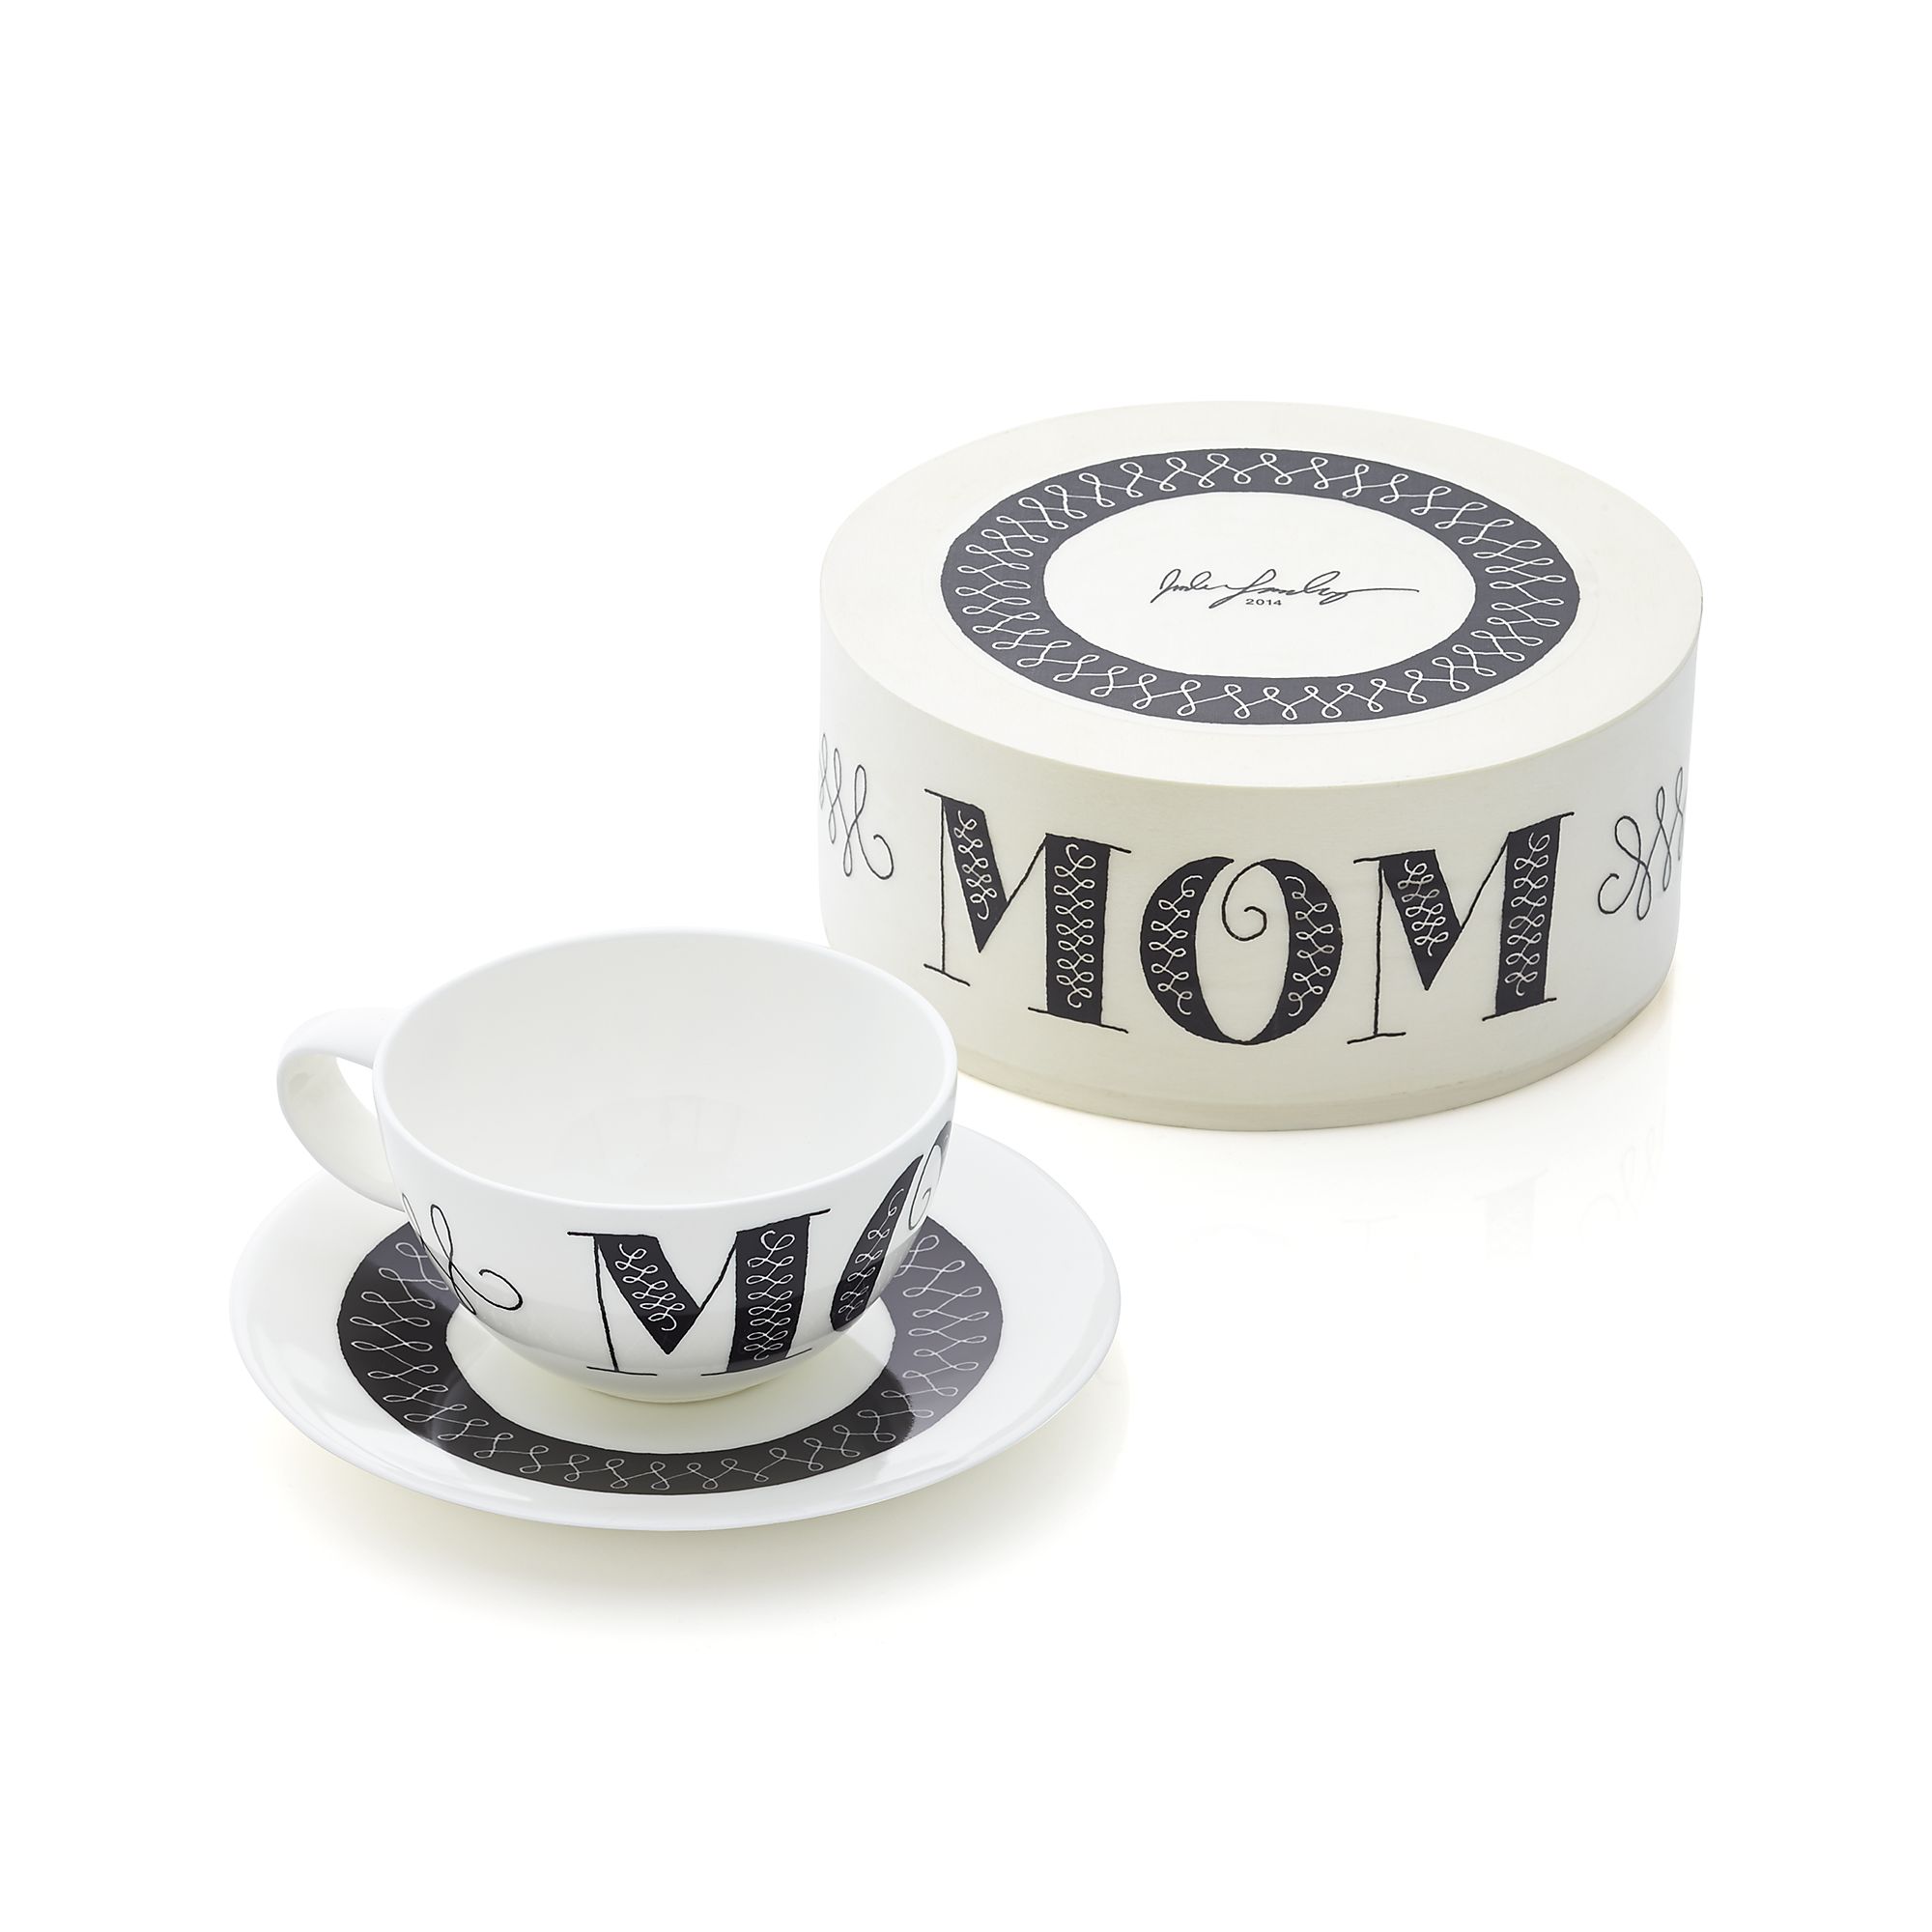 jude-landry-designer-teacup (3).jpg